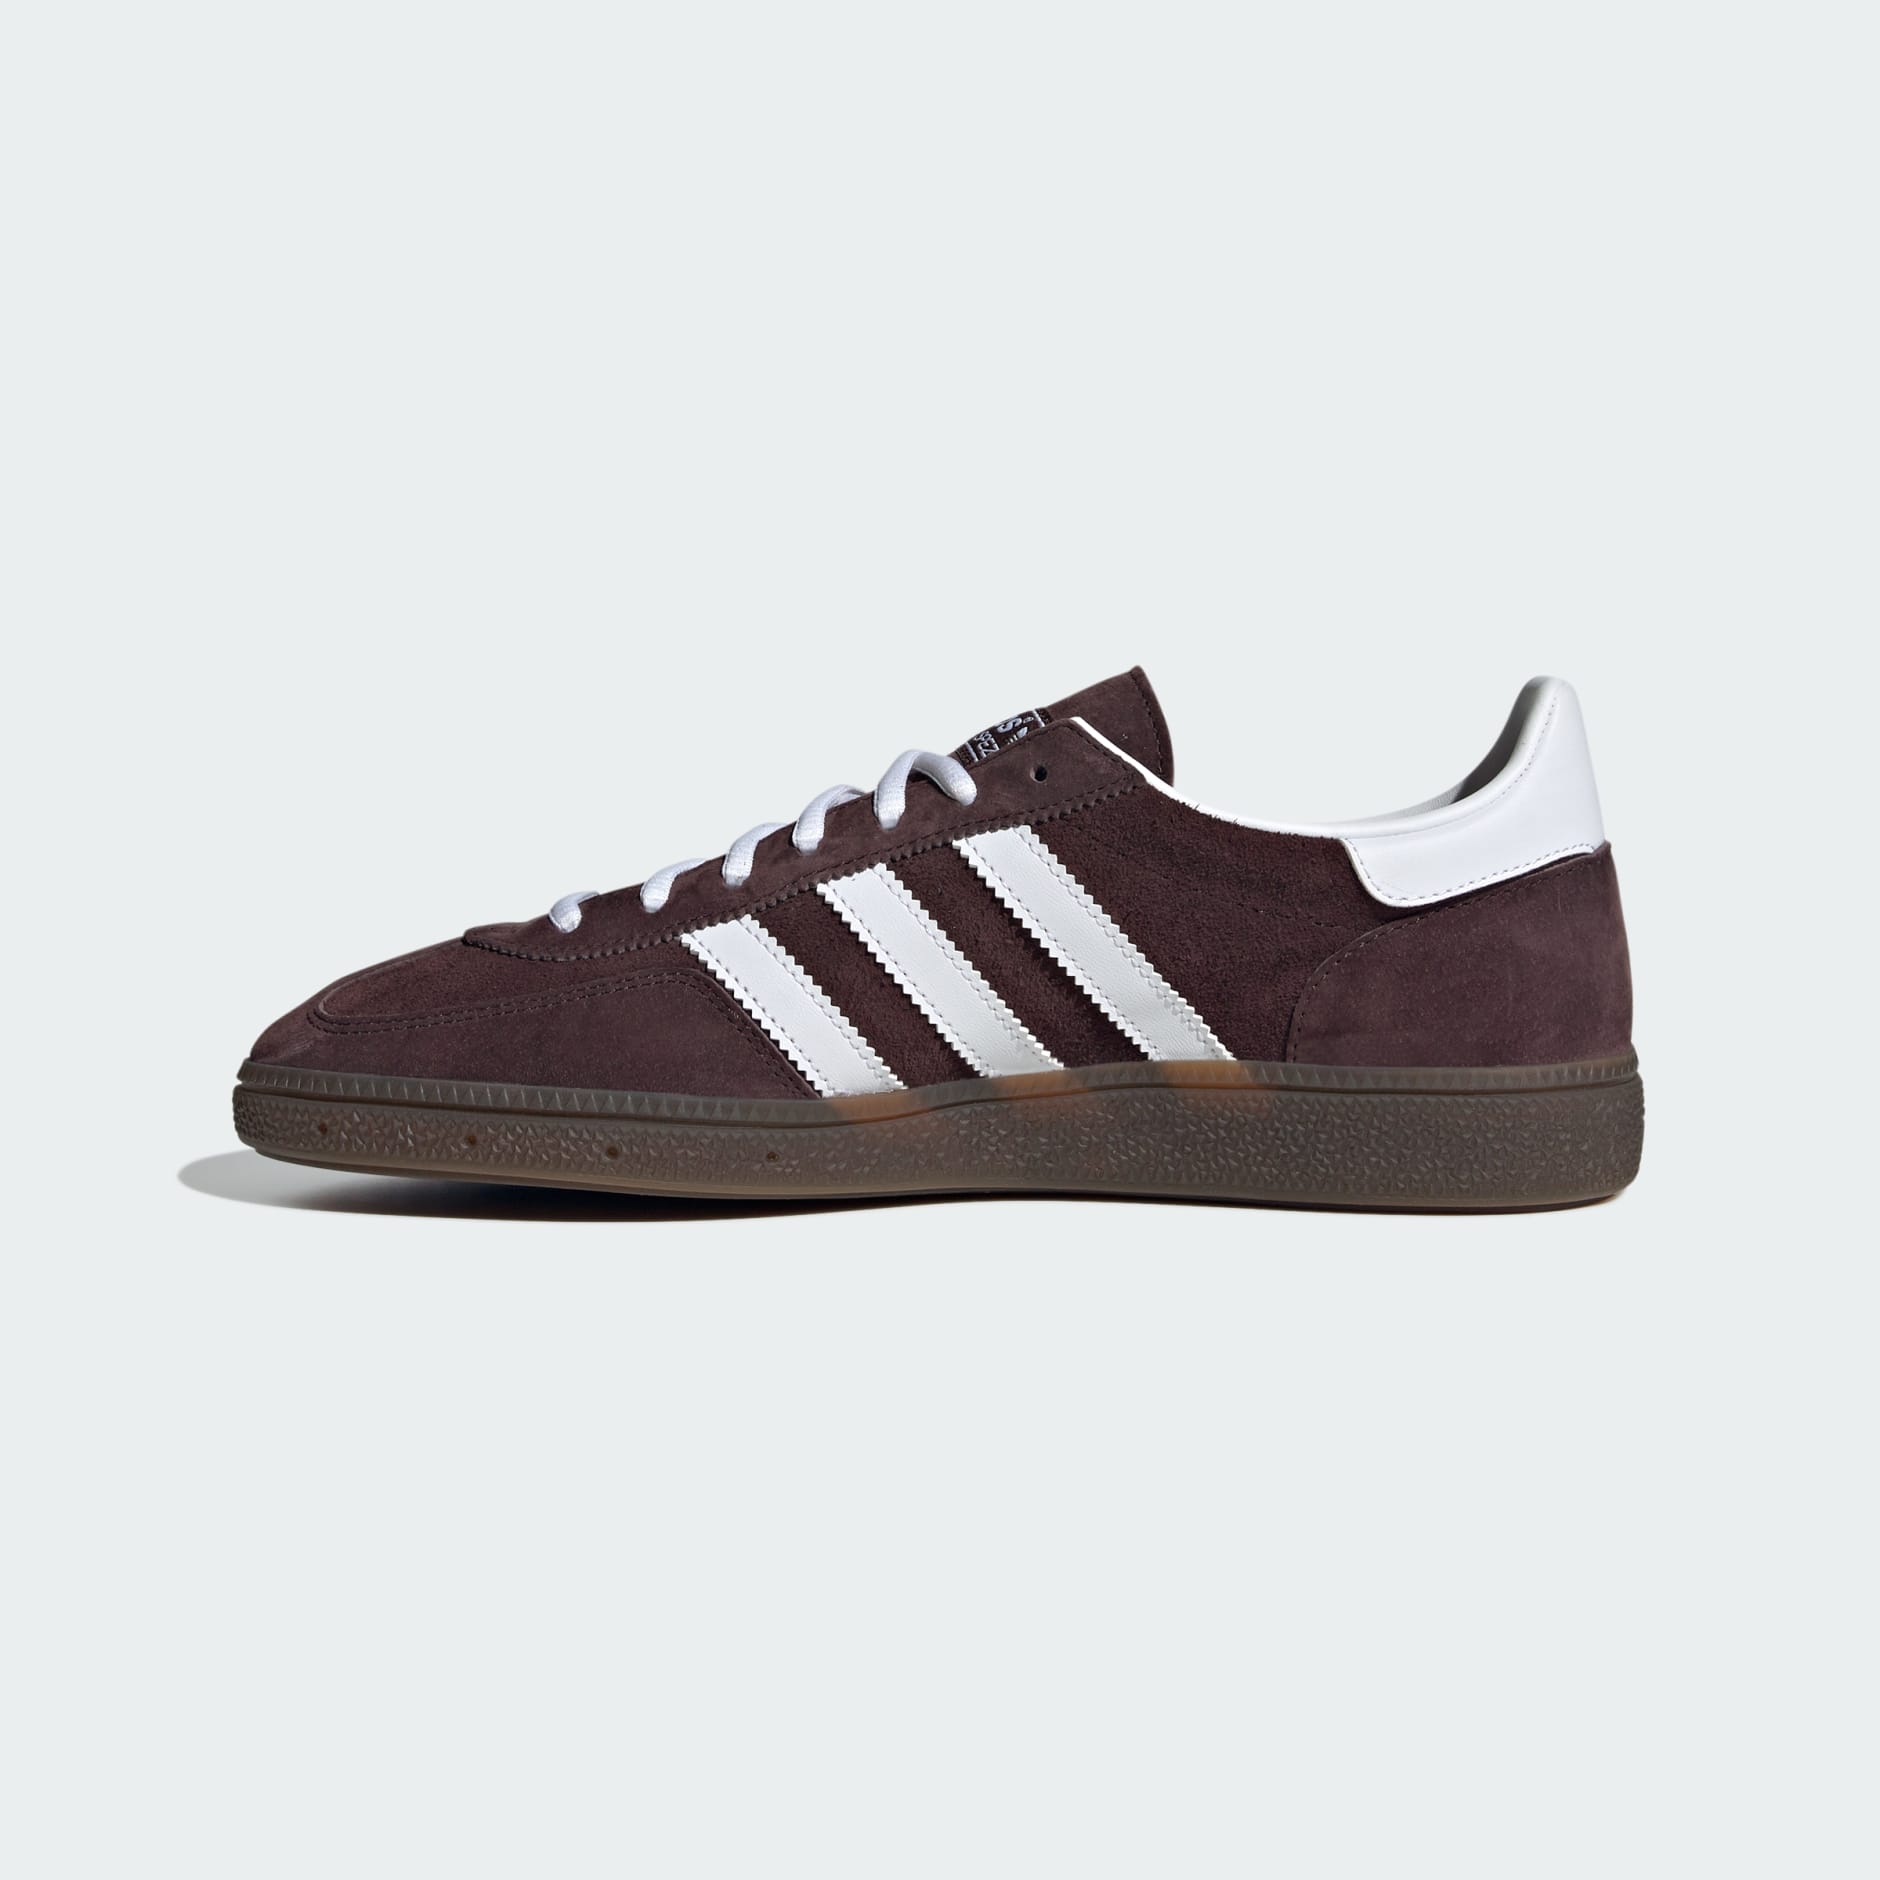 Men's Shoes - Handball Spezial Shoes - Brown | adidas Oman